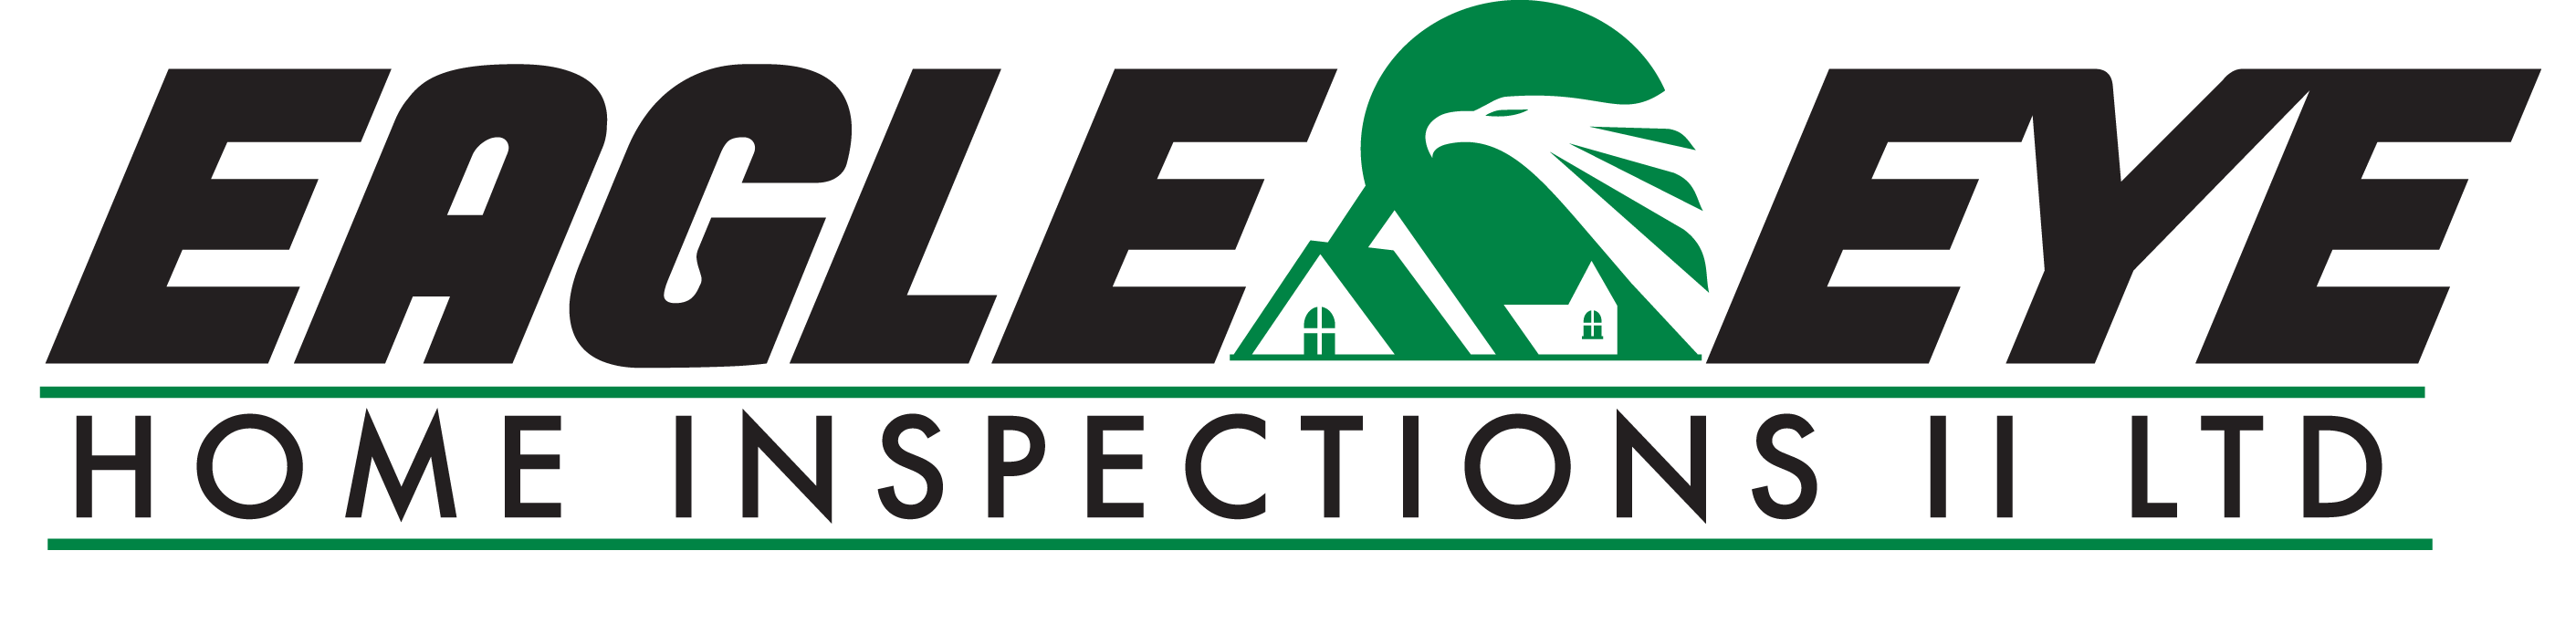 Eagle Eye Home Inspections II Ltd